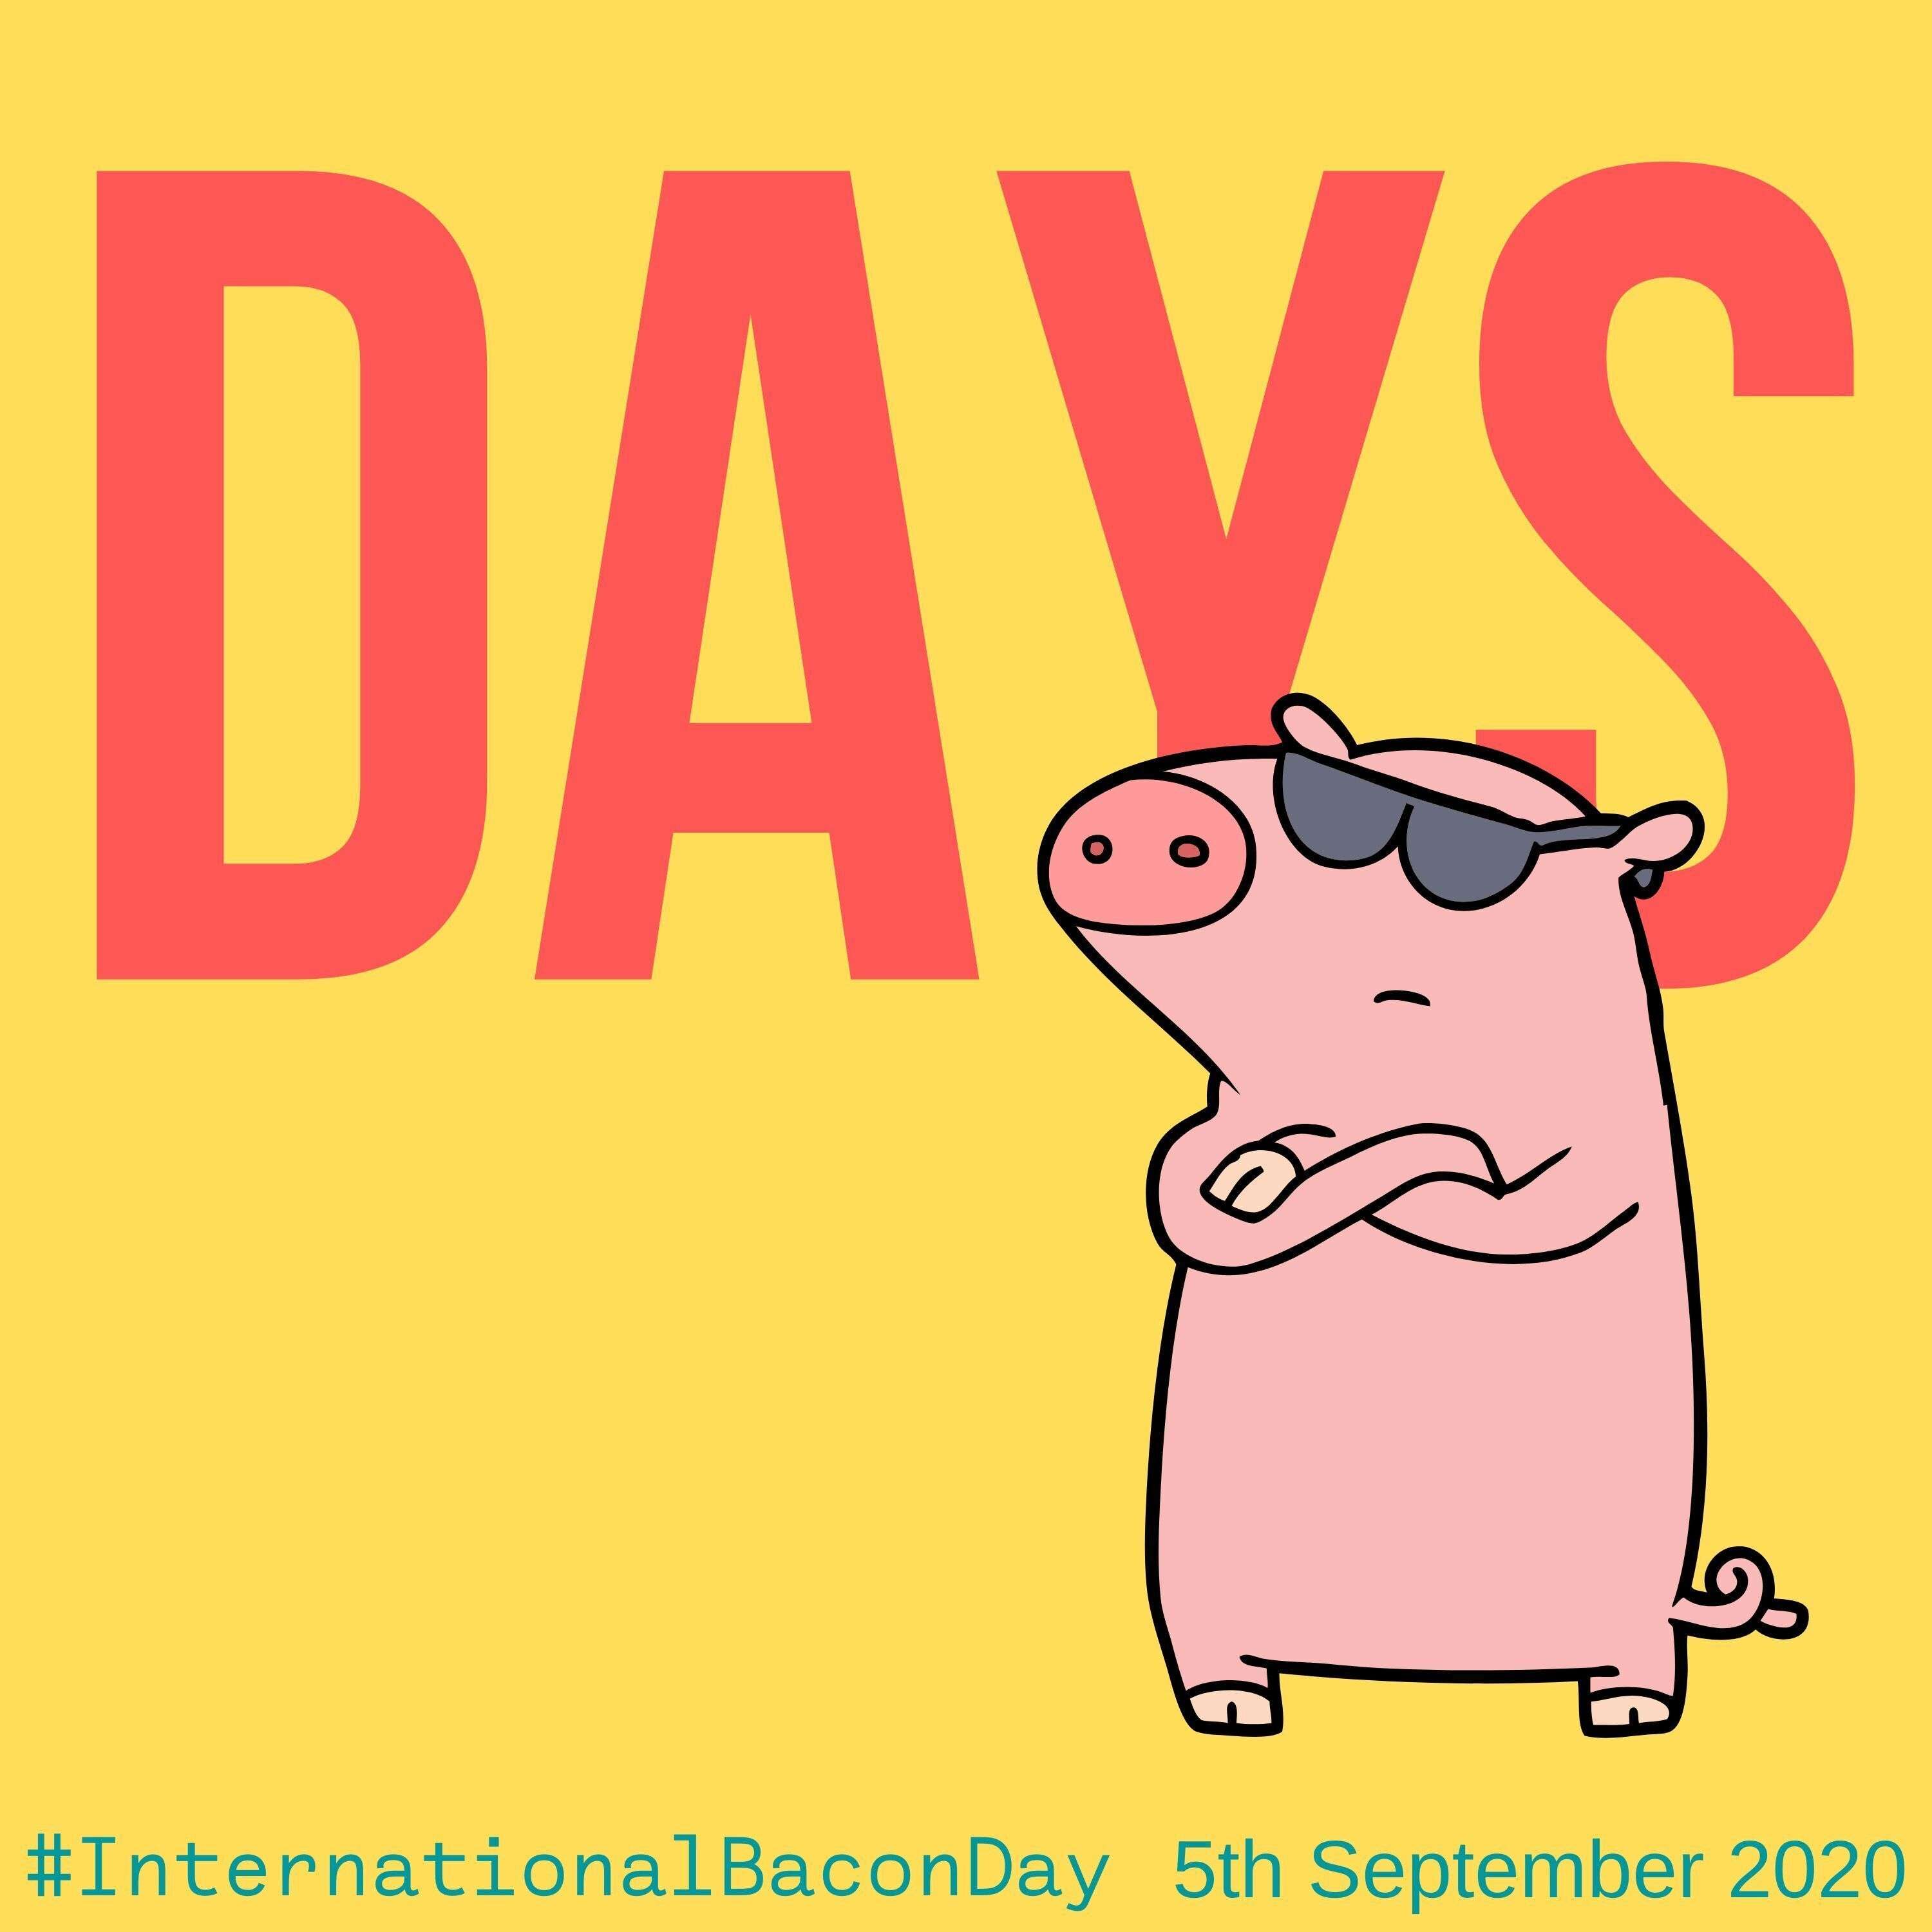 International Bacon Day - 5th September 2020